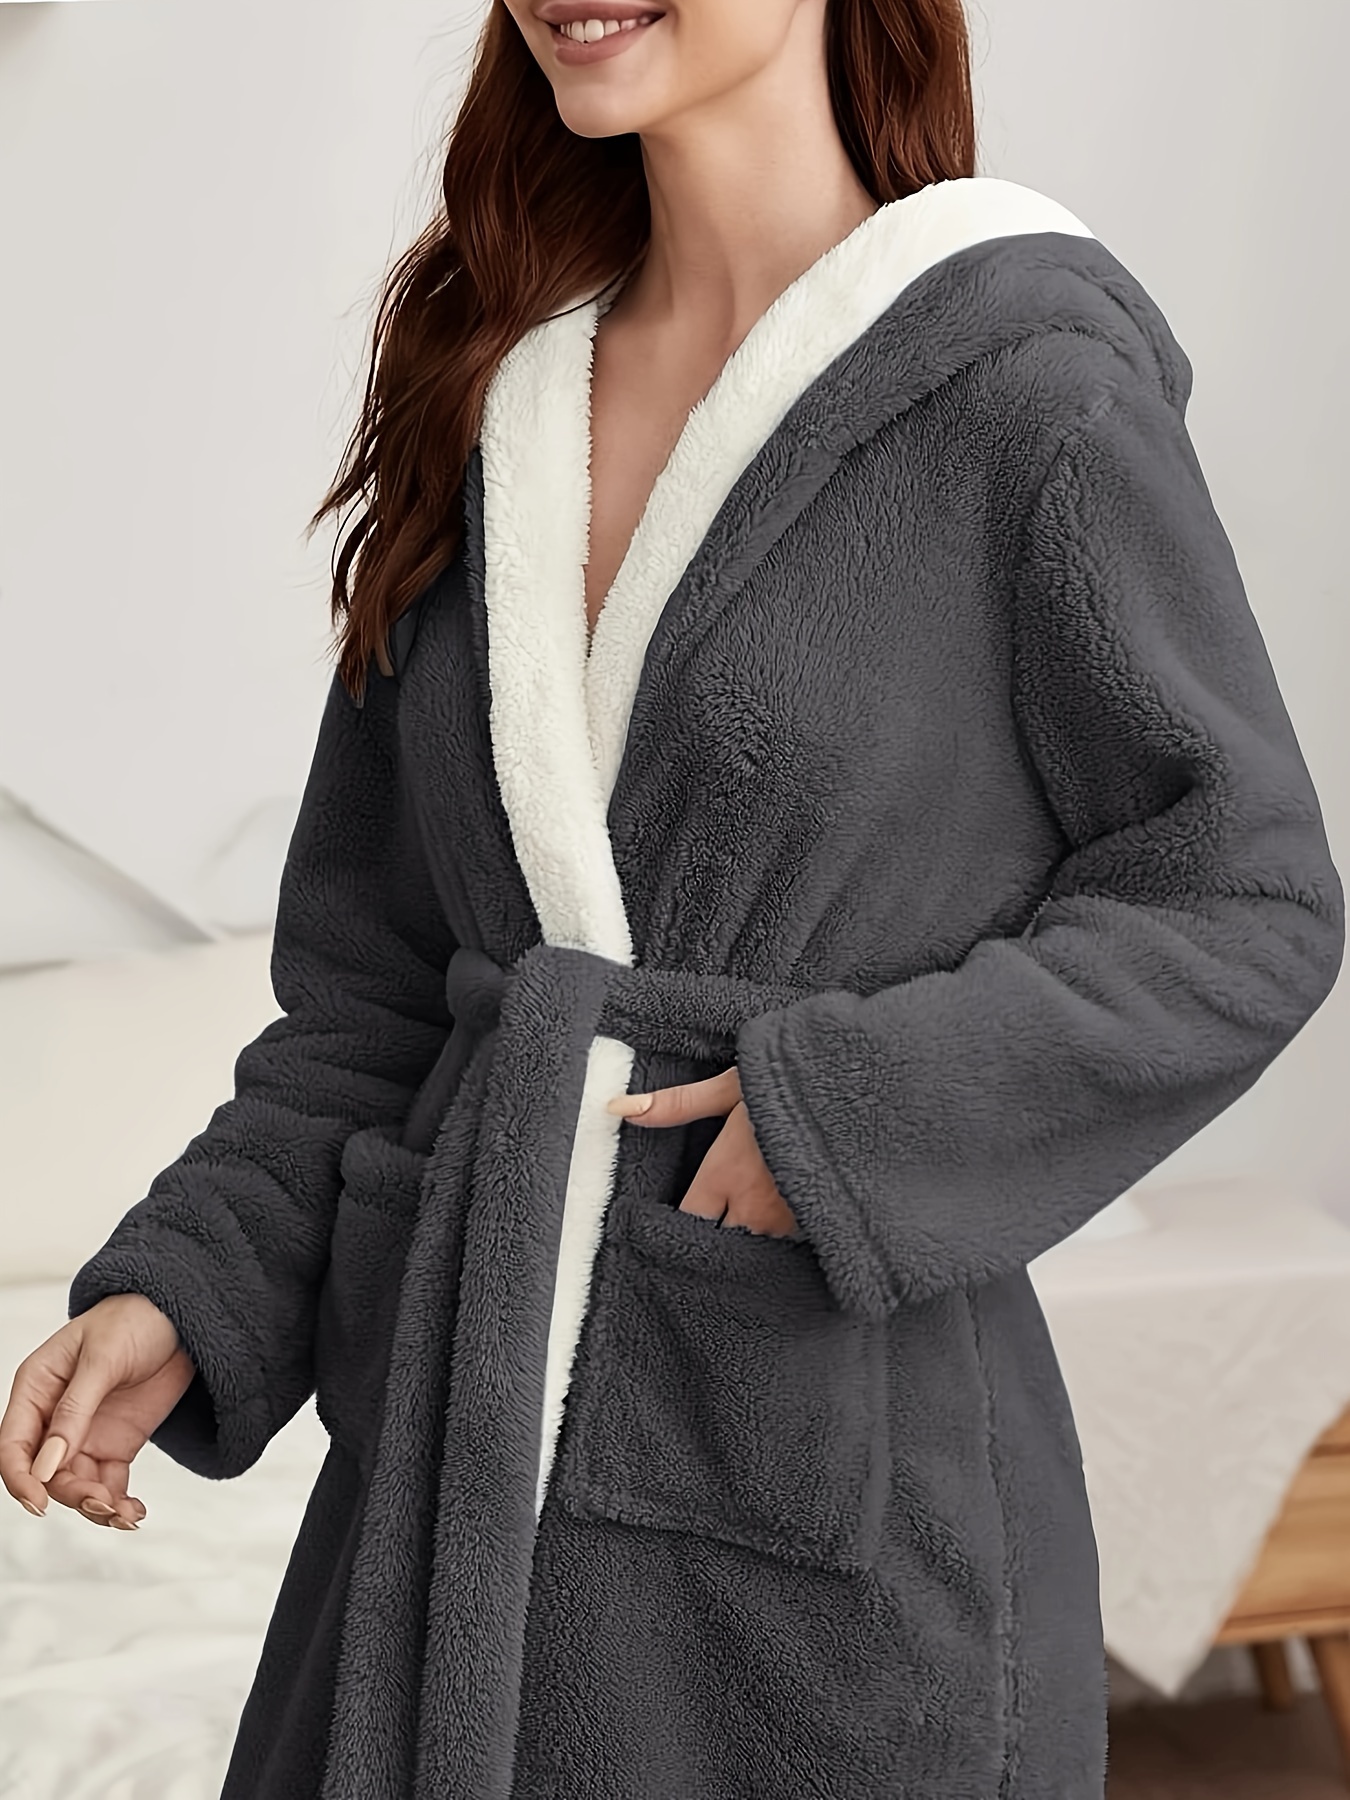 tuduoms Plush Short Robe Womens Soft Comfy Nightgown Fuzzy Fleece Warm Bath  Robes with Waist Belt Ladies Nightgowns Sleepwear : : Clothing